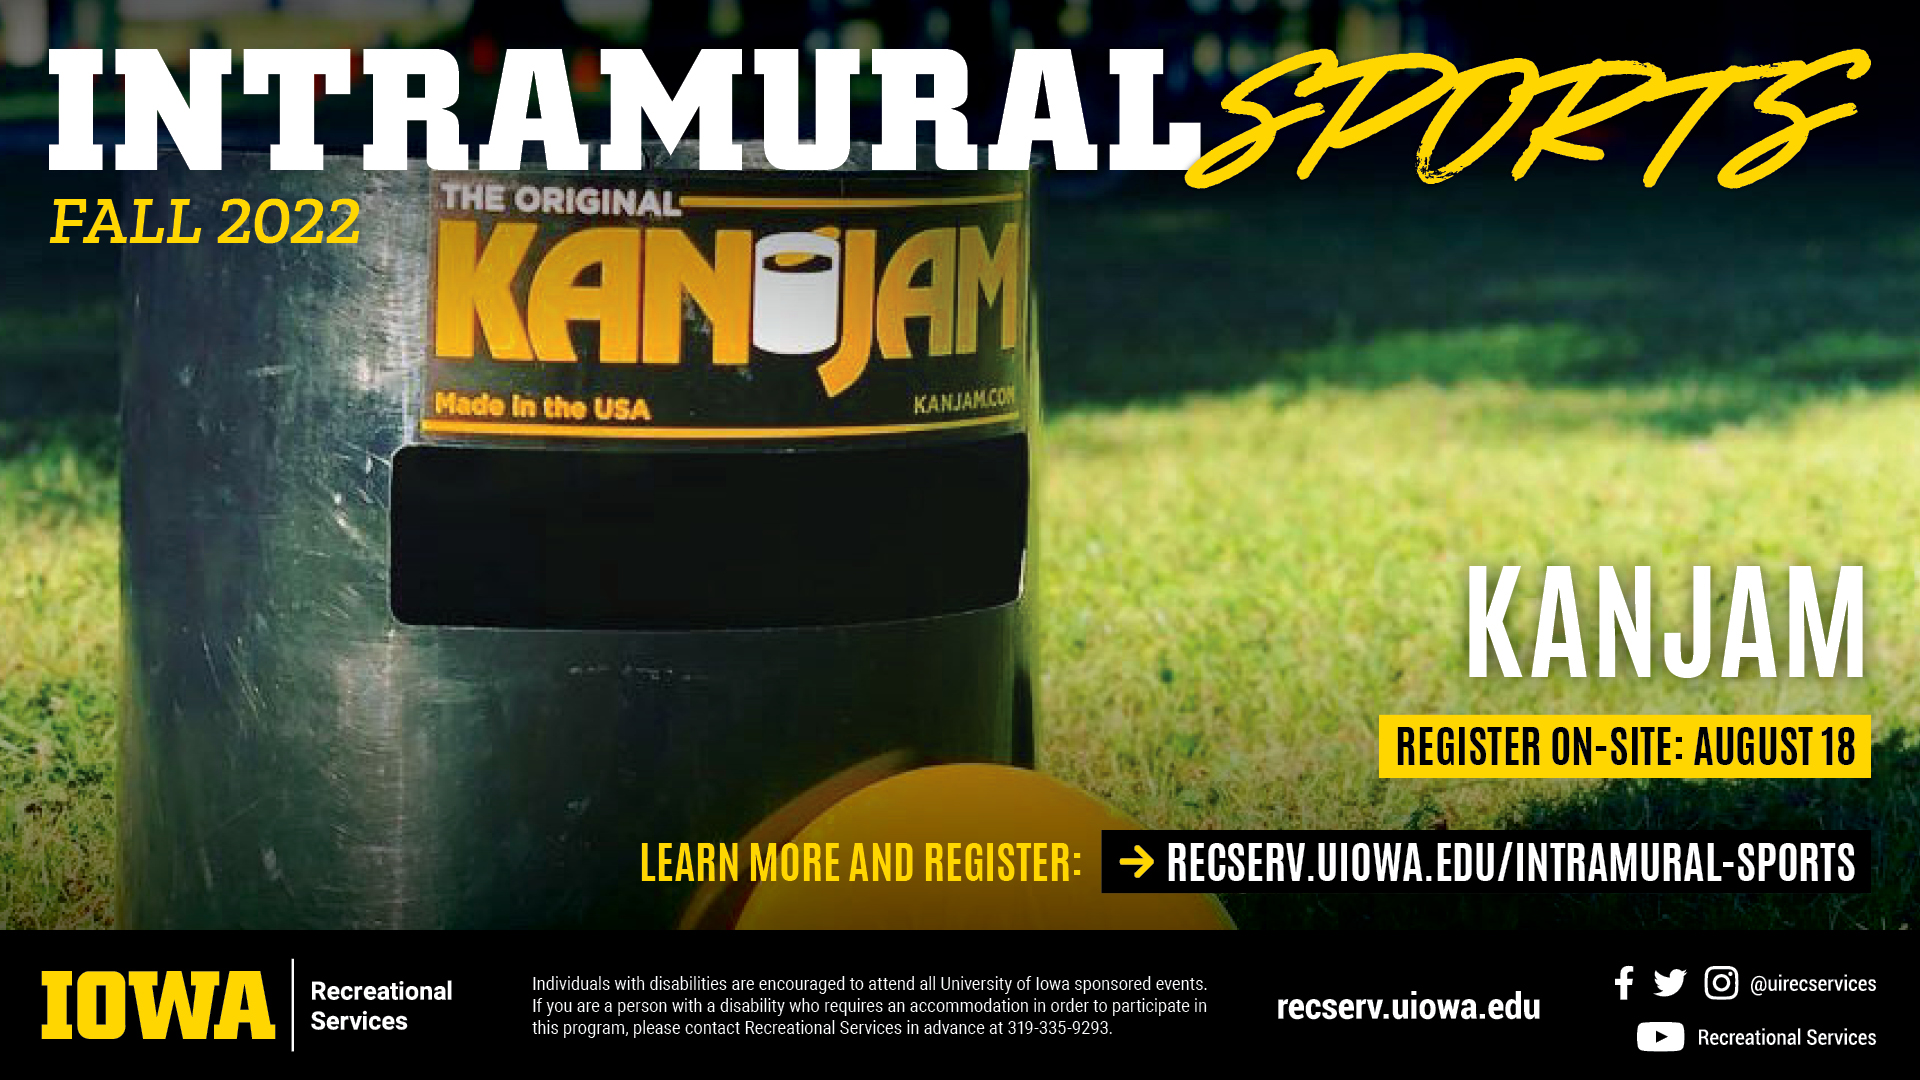 Intramural Sports Fall 2022: KanJam. Learn more and register at reserv.uiowa.edu/intramural-sports